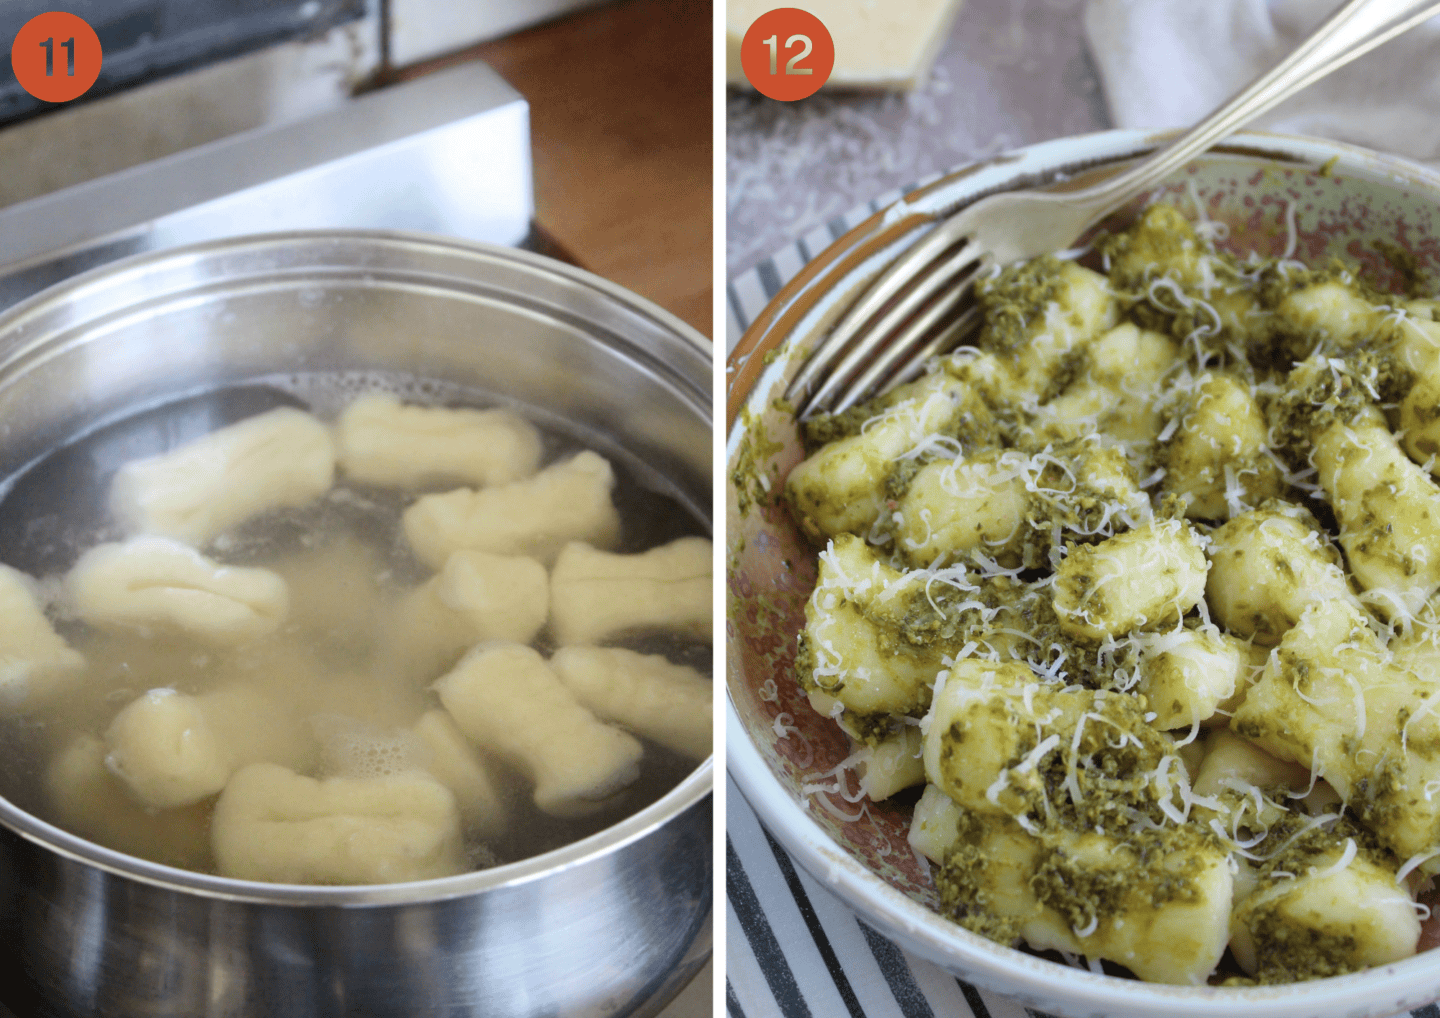 Boiling the gnocchi and (right) gnocchi coated in pesto.